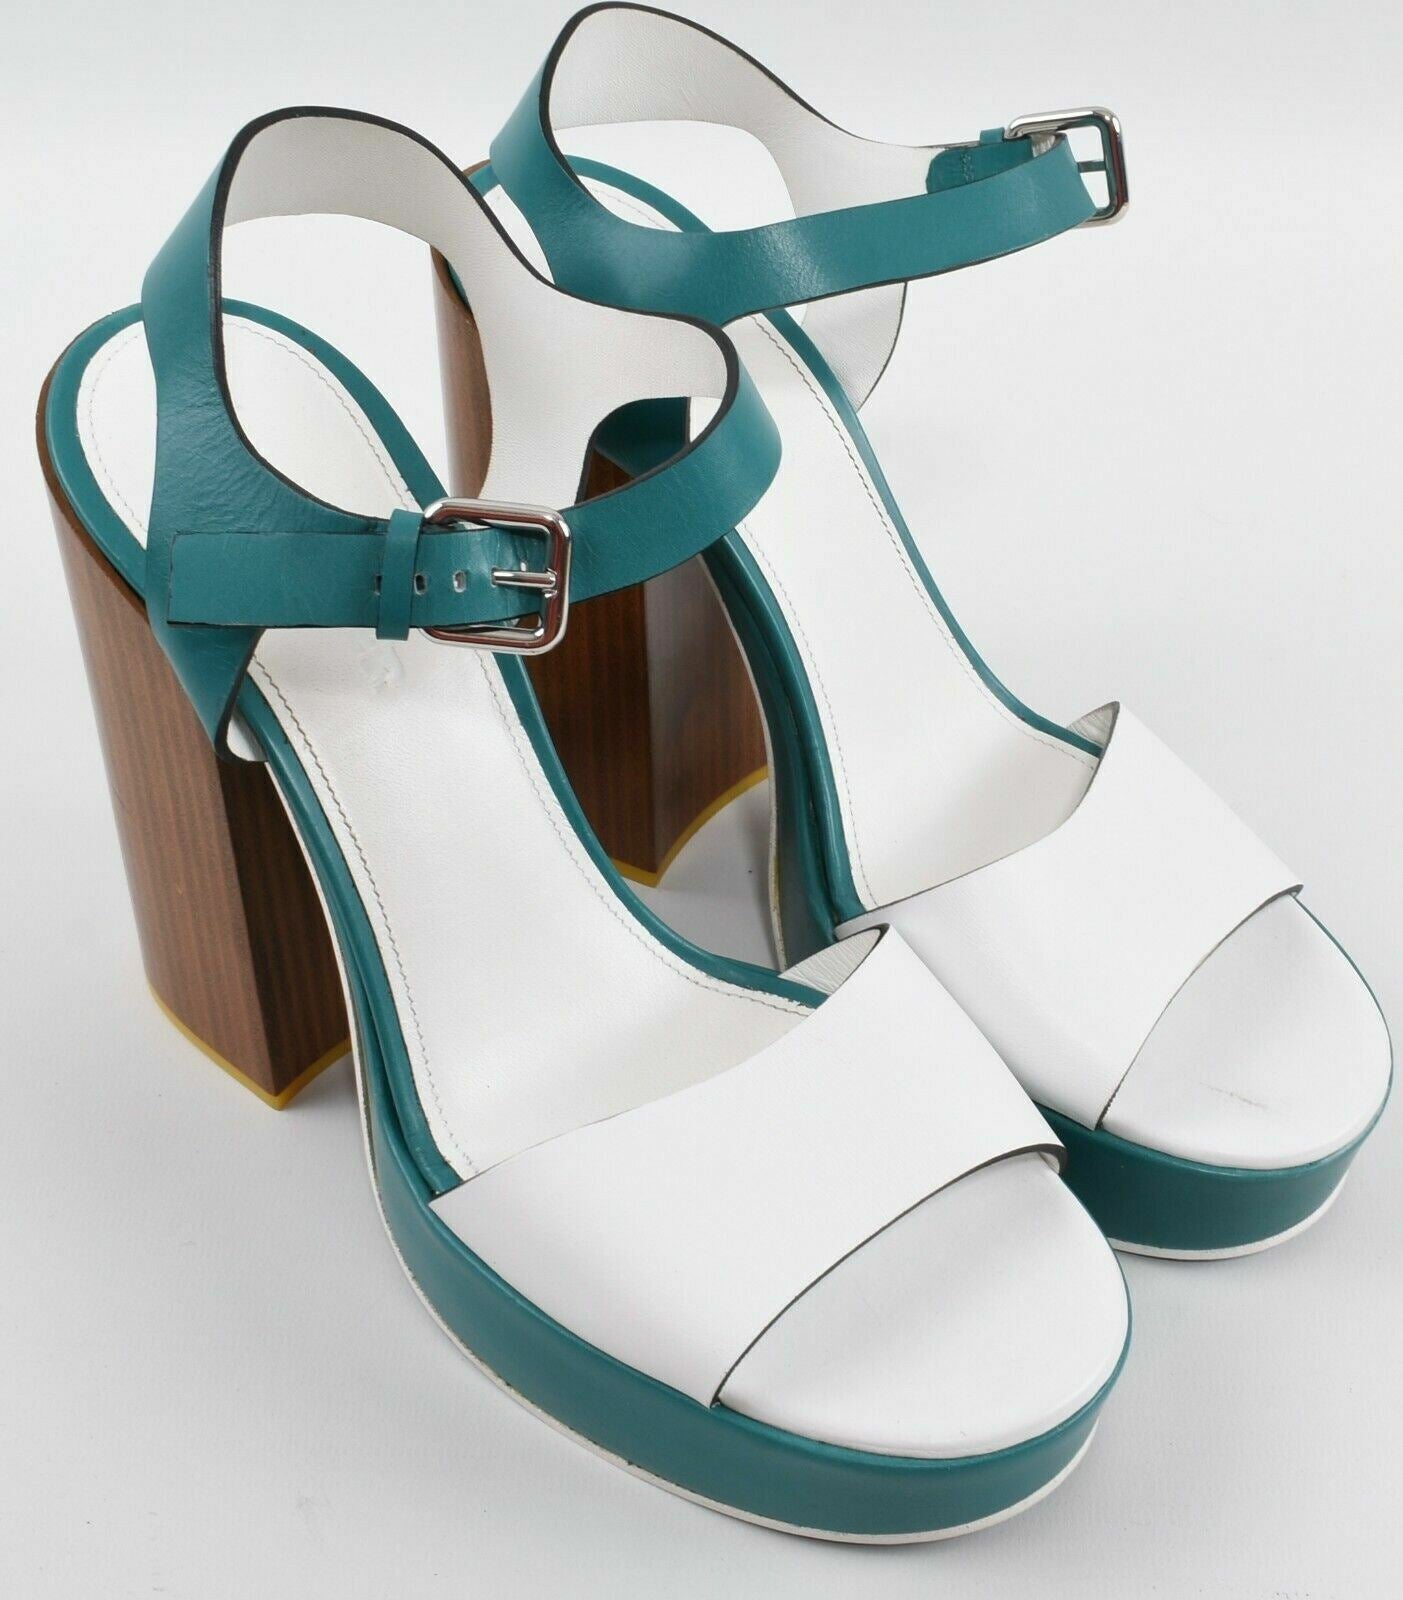 JIL SANDER Women's Block Heel Platform Sandals, Shoes, White/Green, UK 7 /EU 40